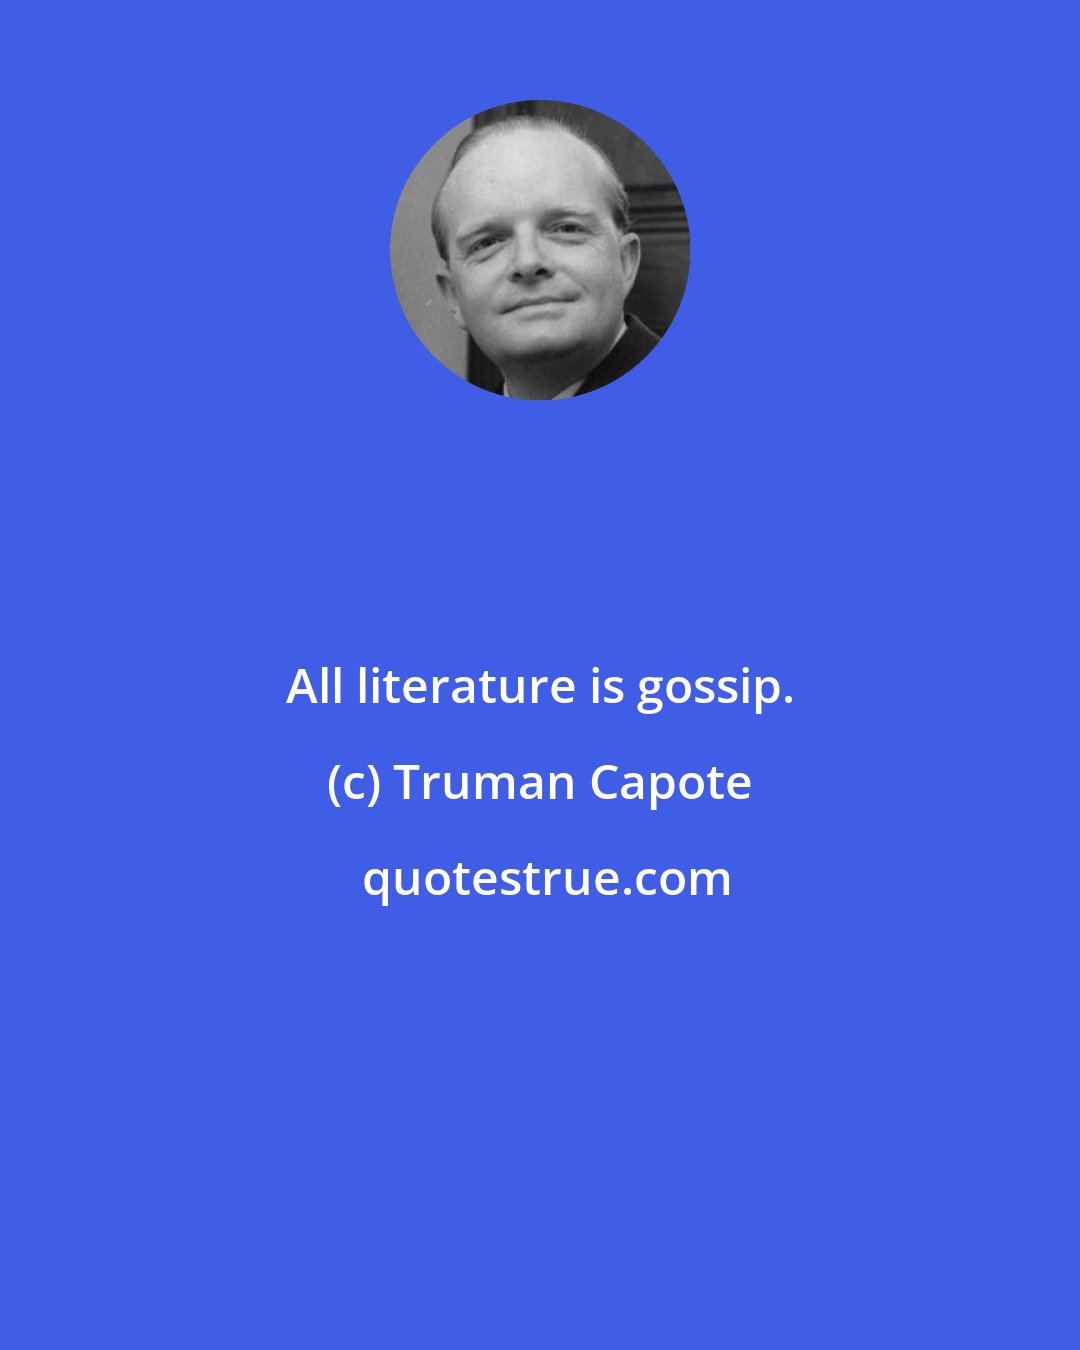 Truman Capote: All literature is gossip.